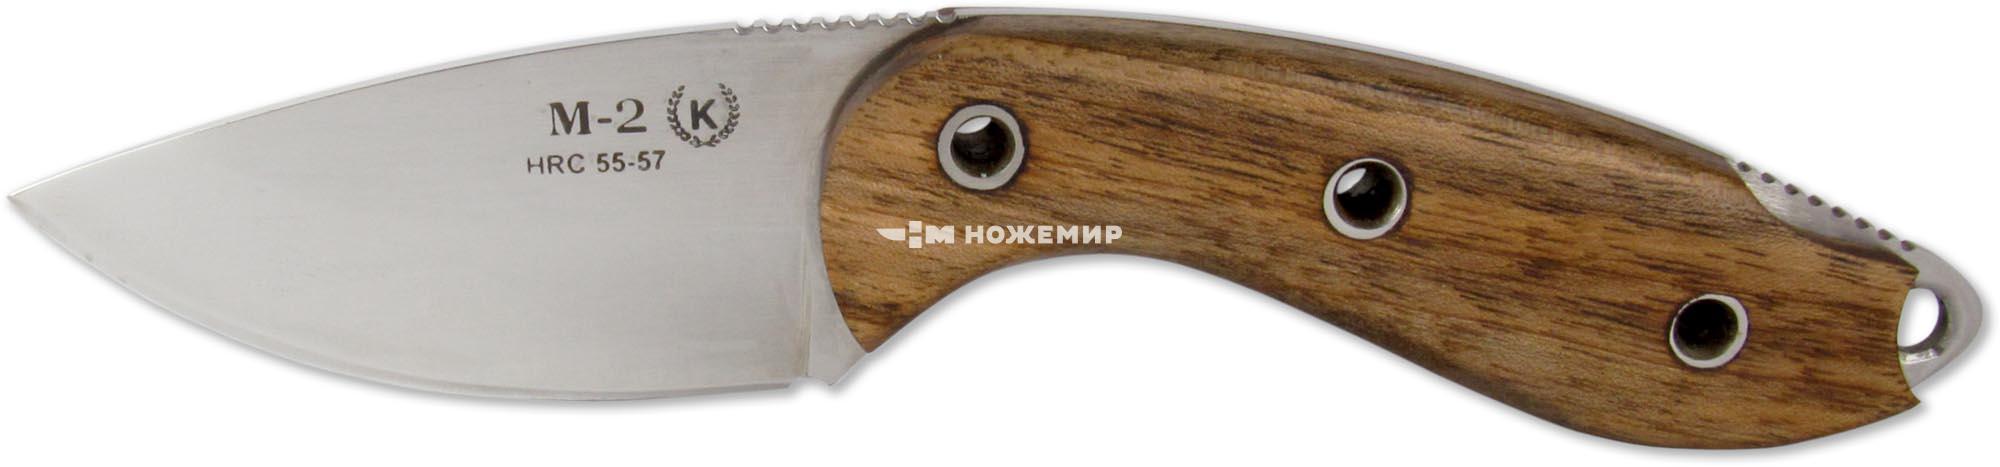 М-2-К (8031) Нож шкуросъёмный М-2 накладка (рукоять дерево) / Кизляр